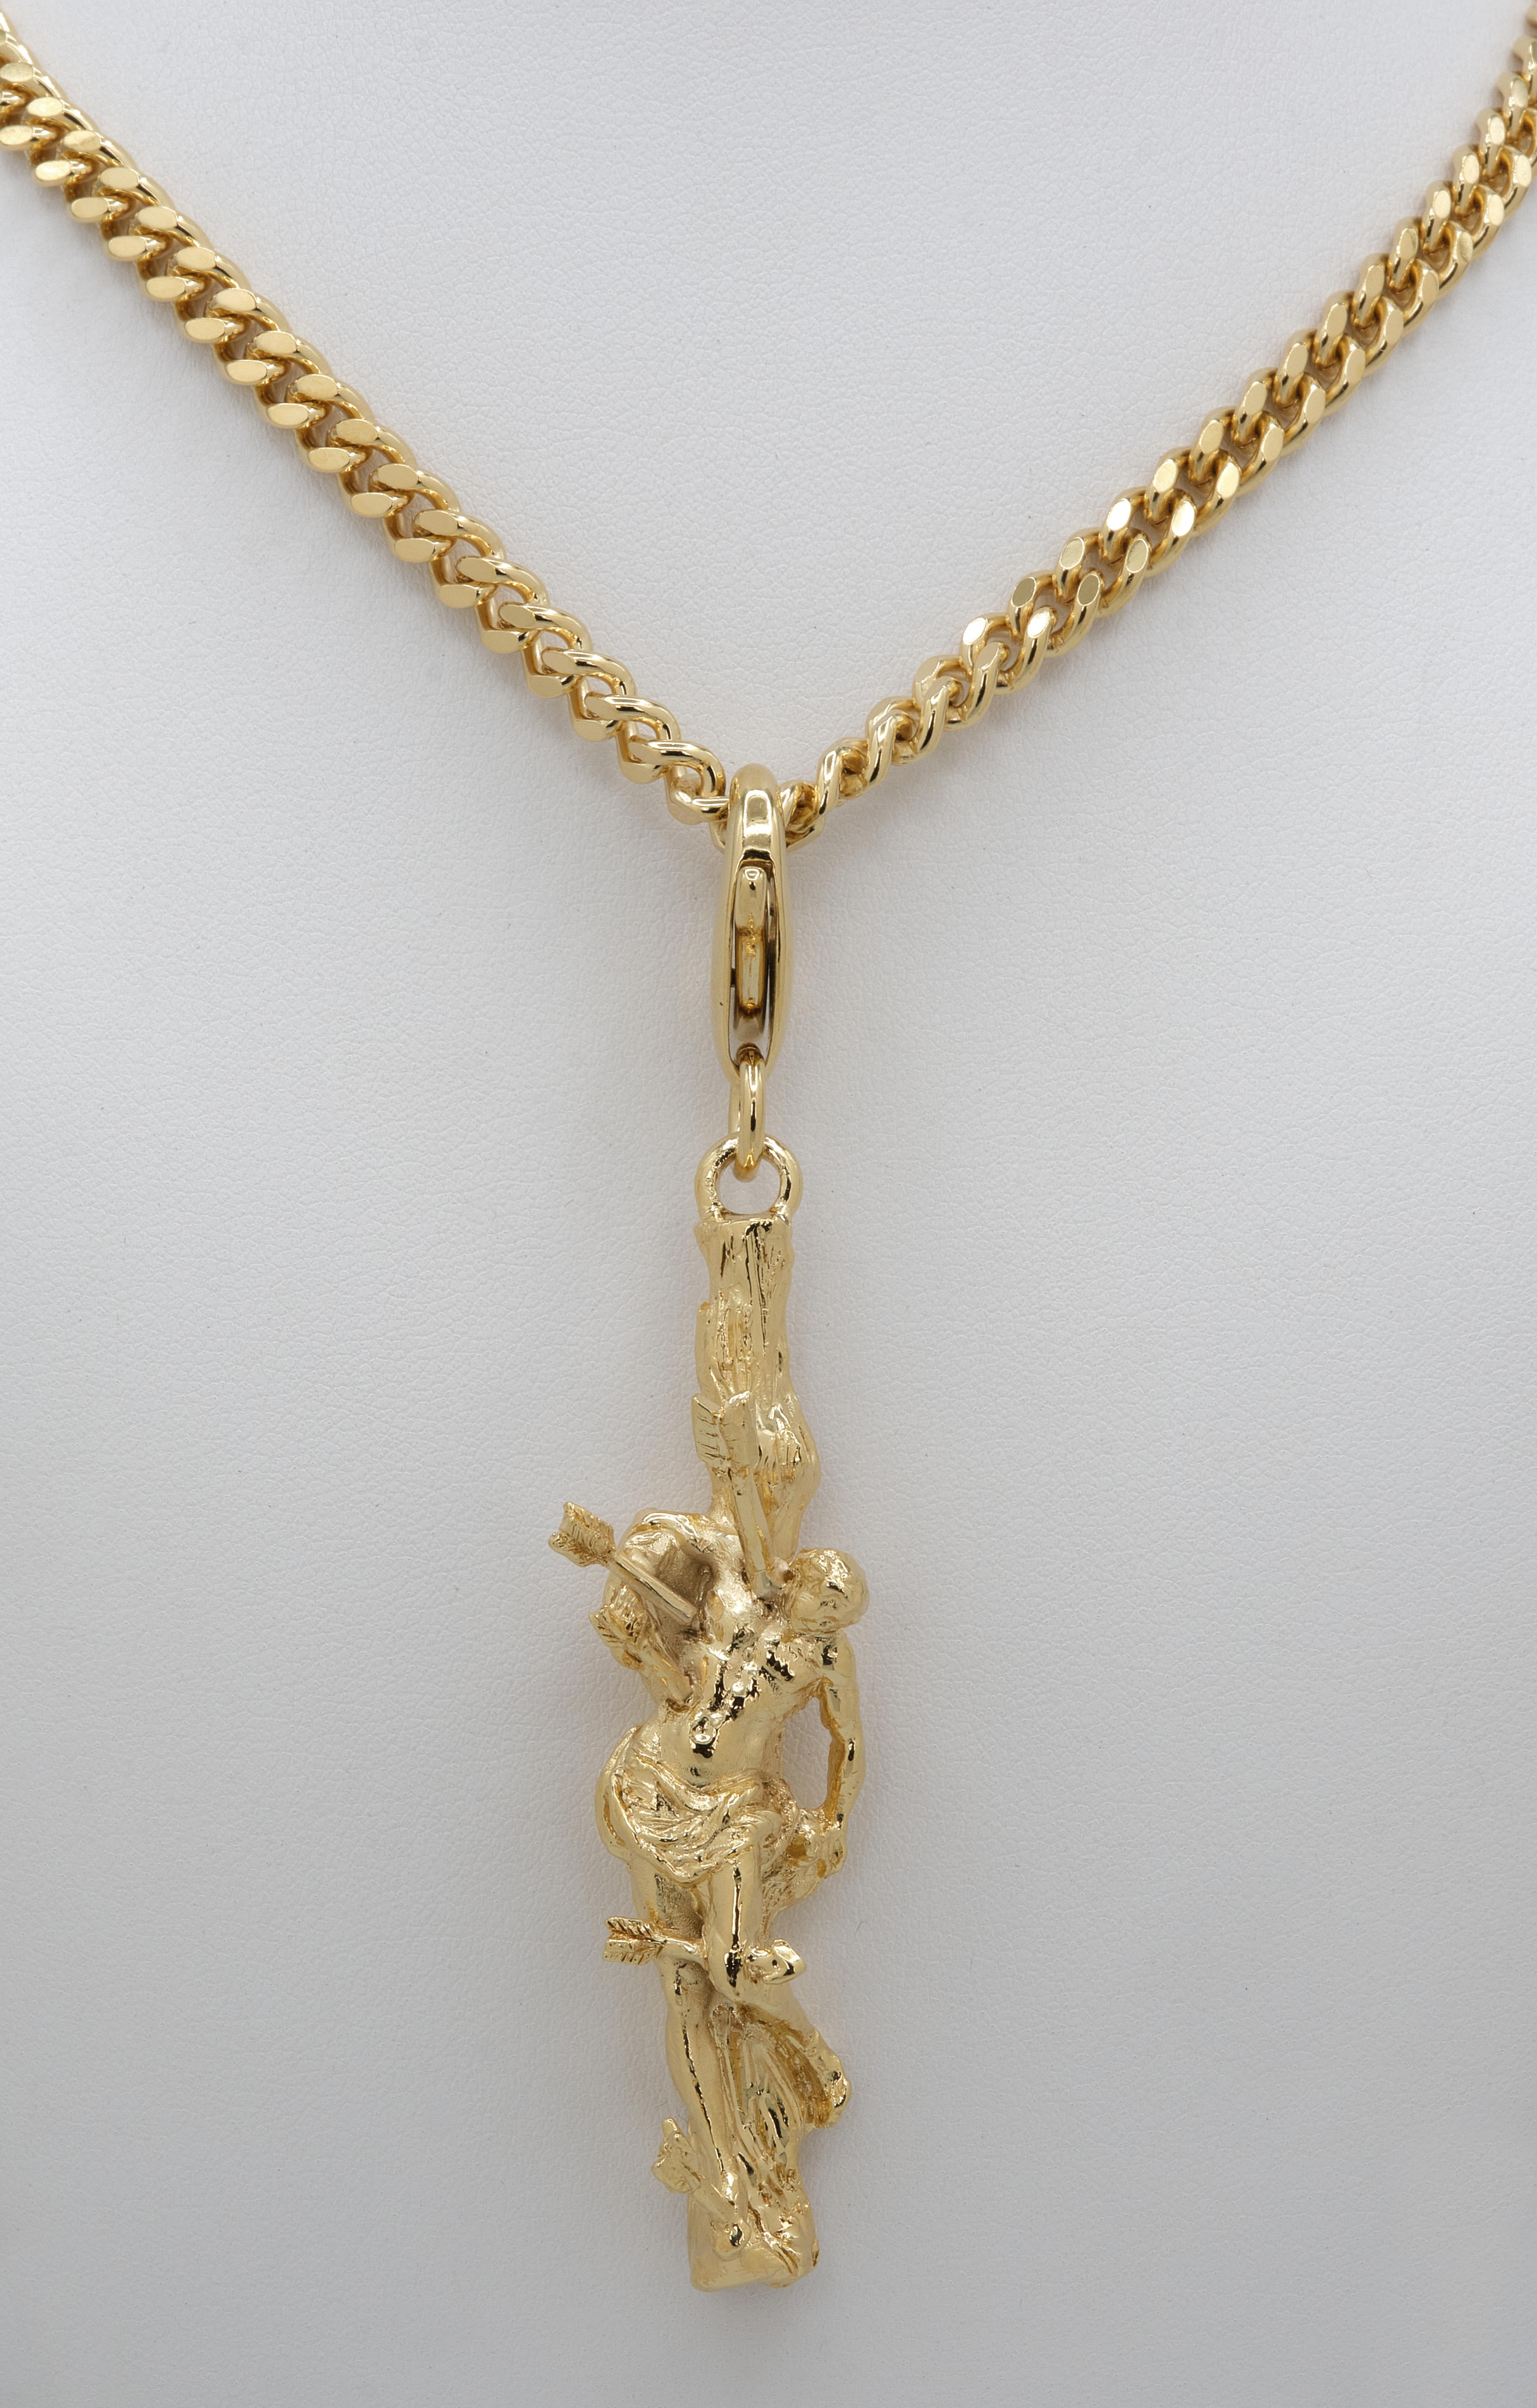 925 silver pendant necklace